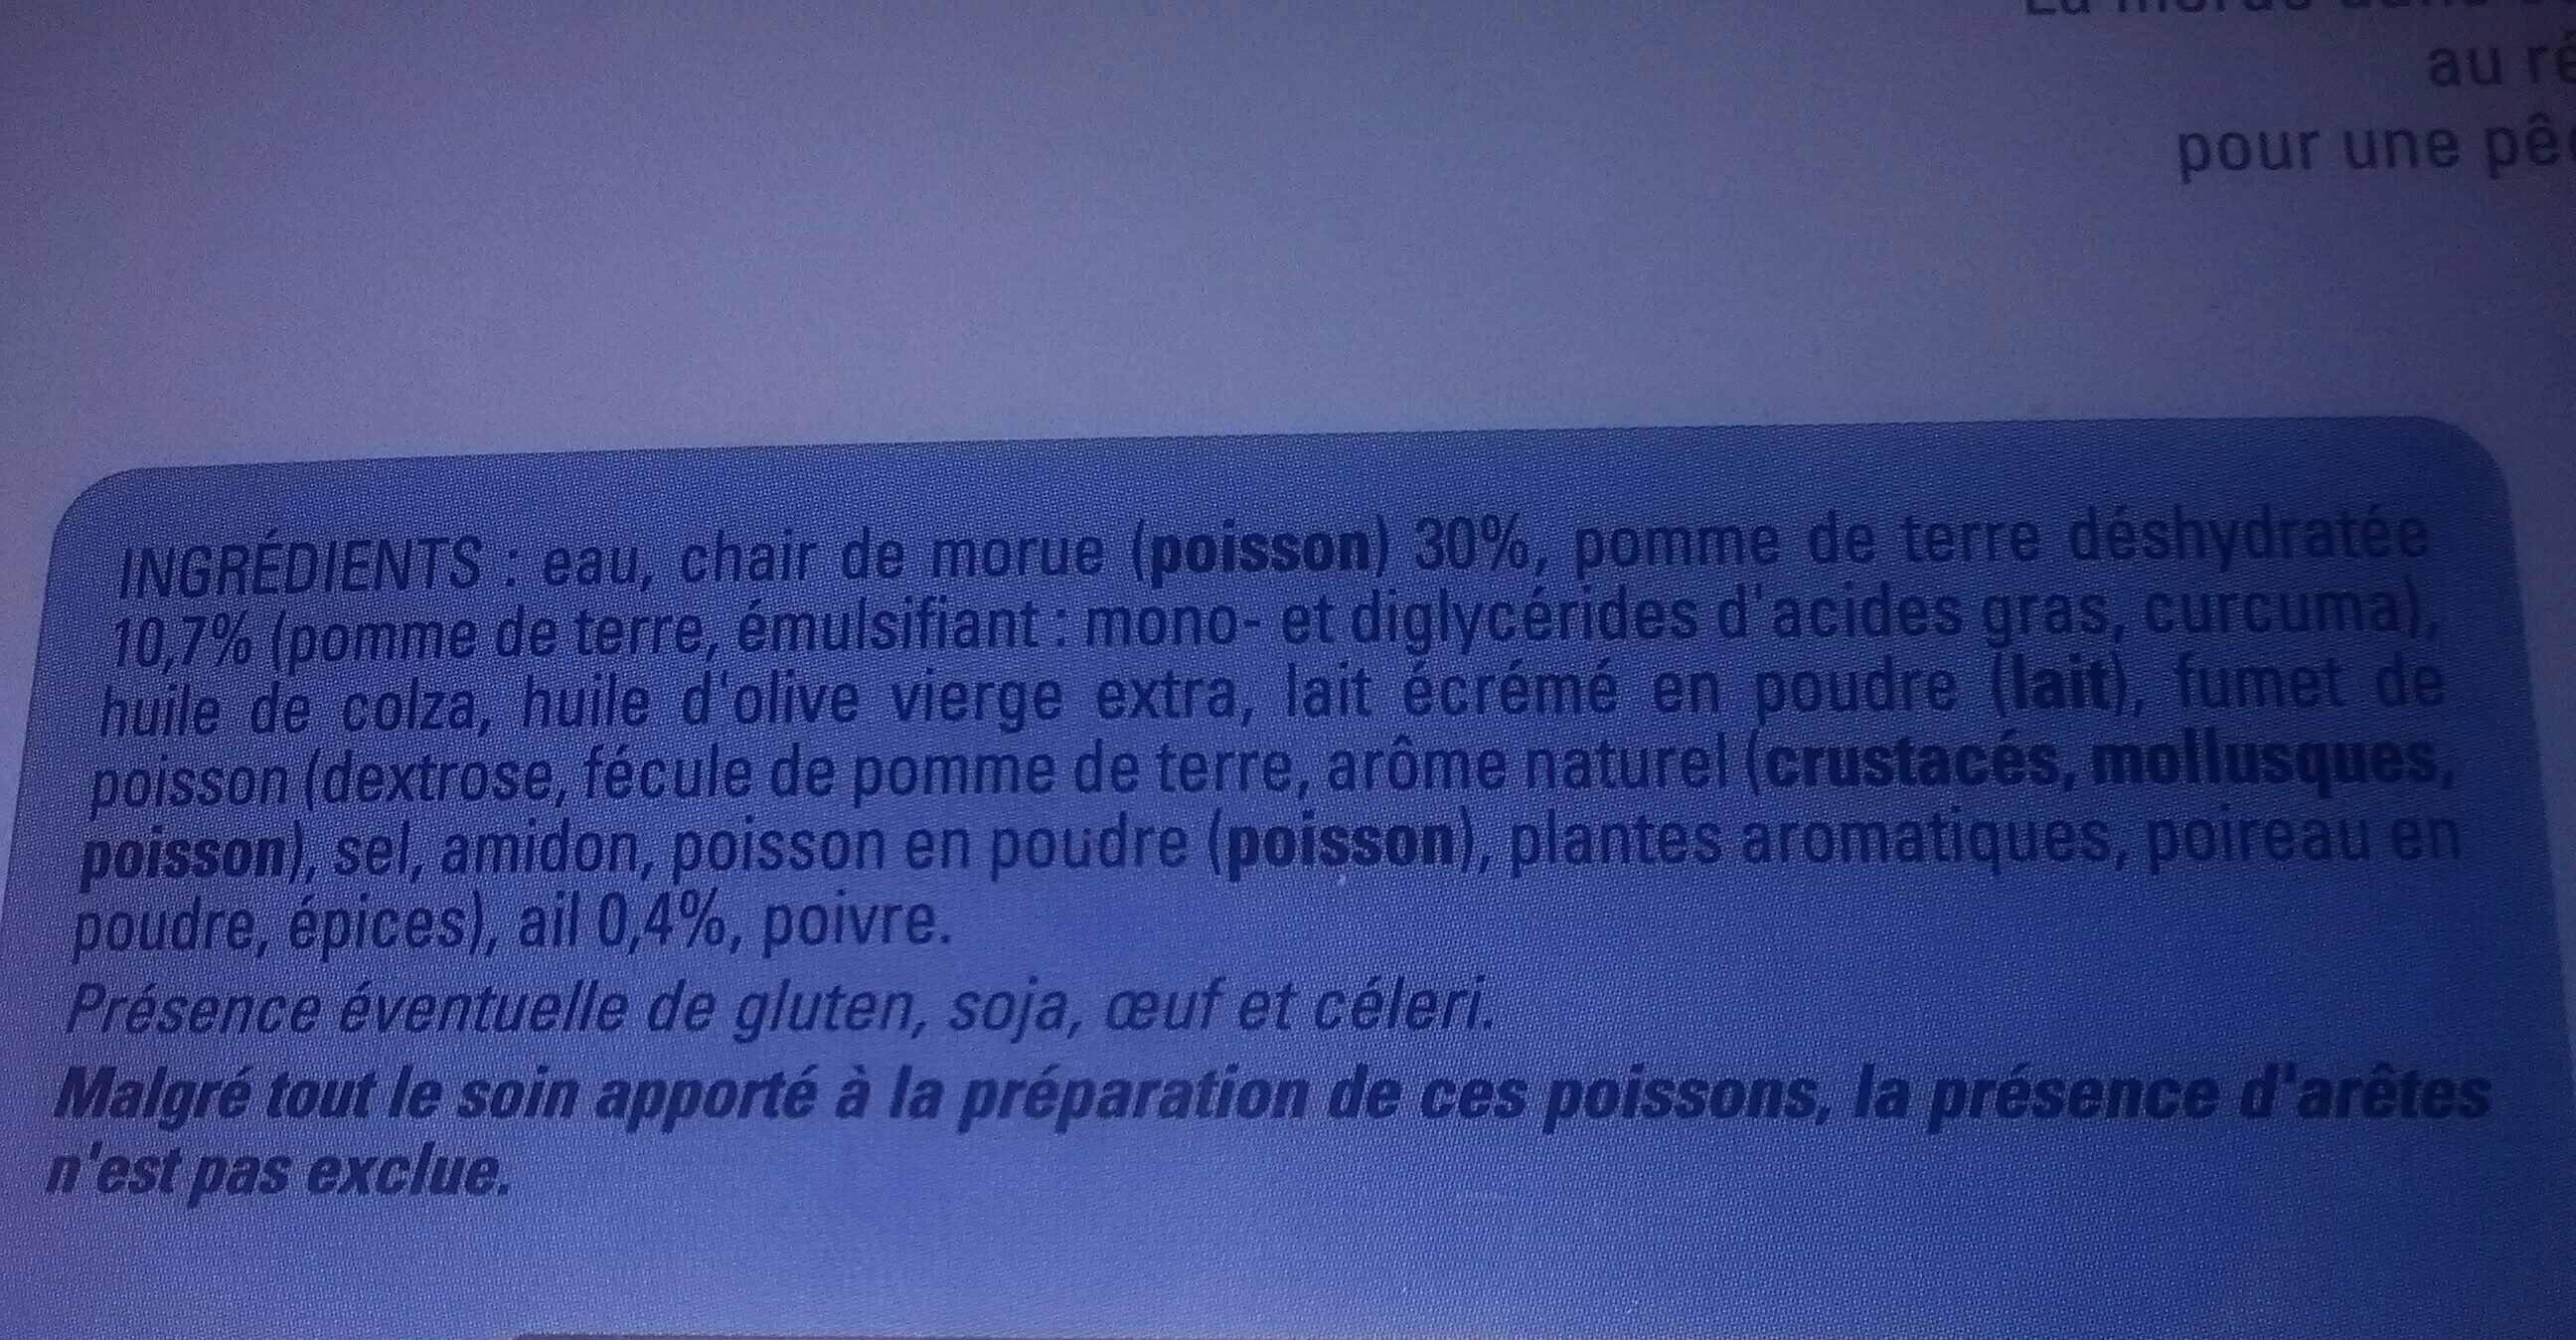 Brandade de morue parmentière - Ingredients - fr